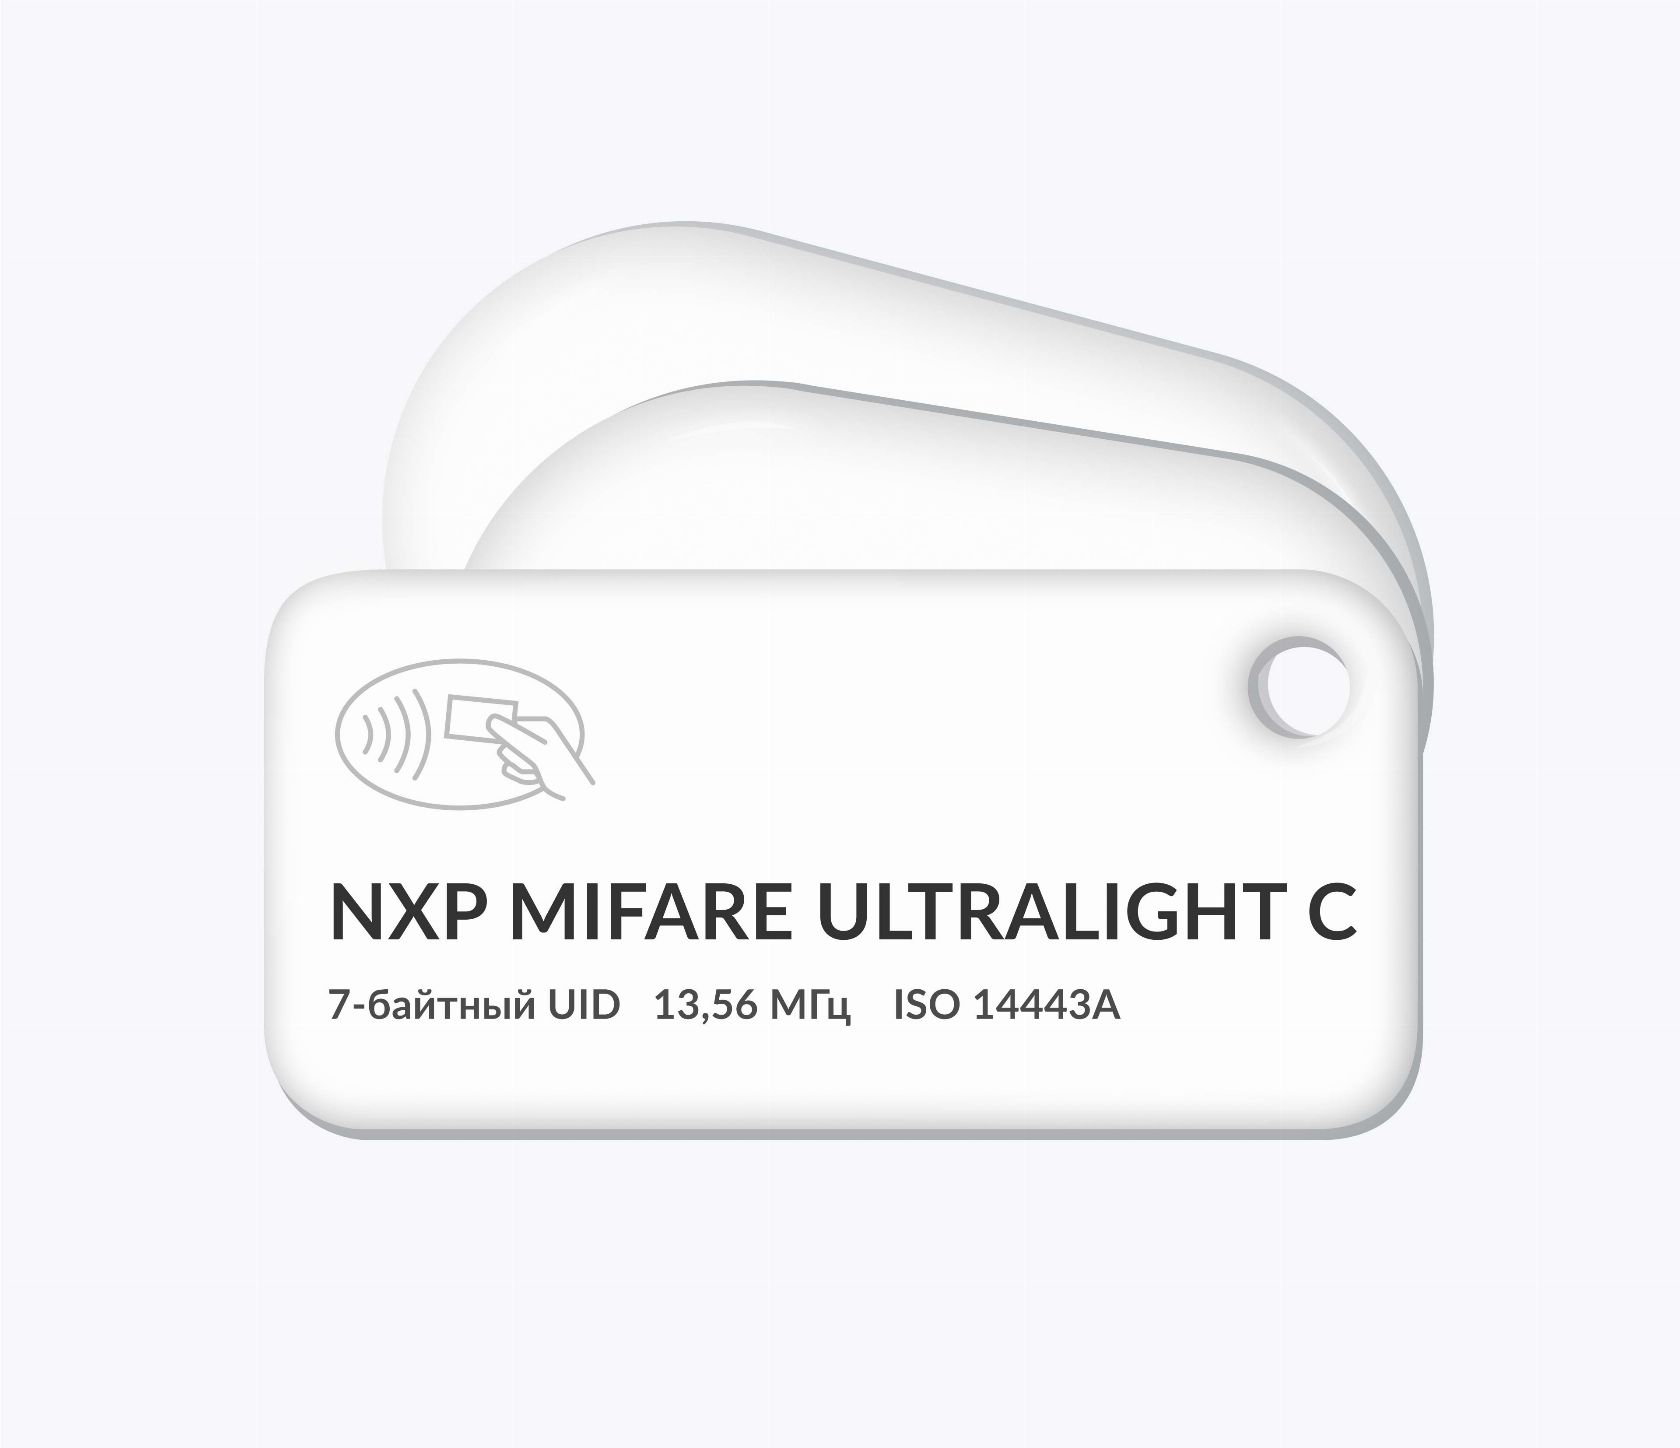 RFID-брелоки NEOKEY® с чипом NXP MIFARE Ultralight C 7 byte UID и вашим логотипом